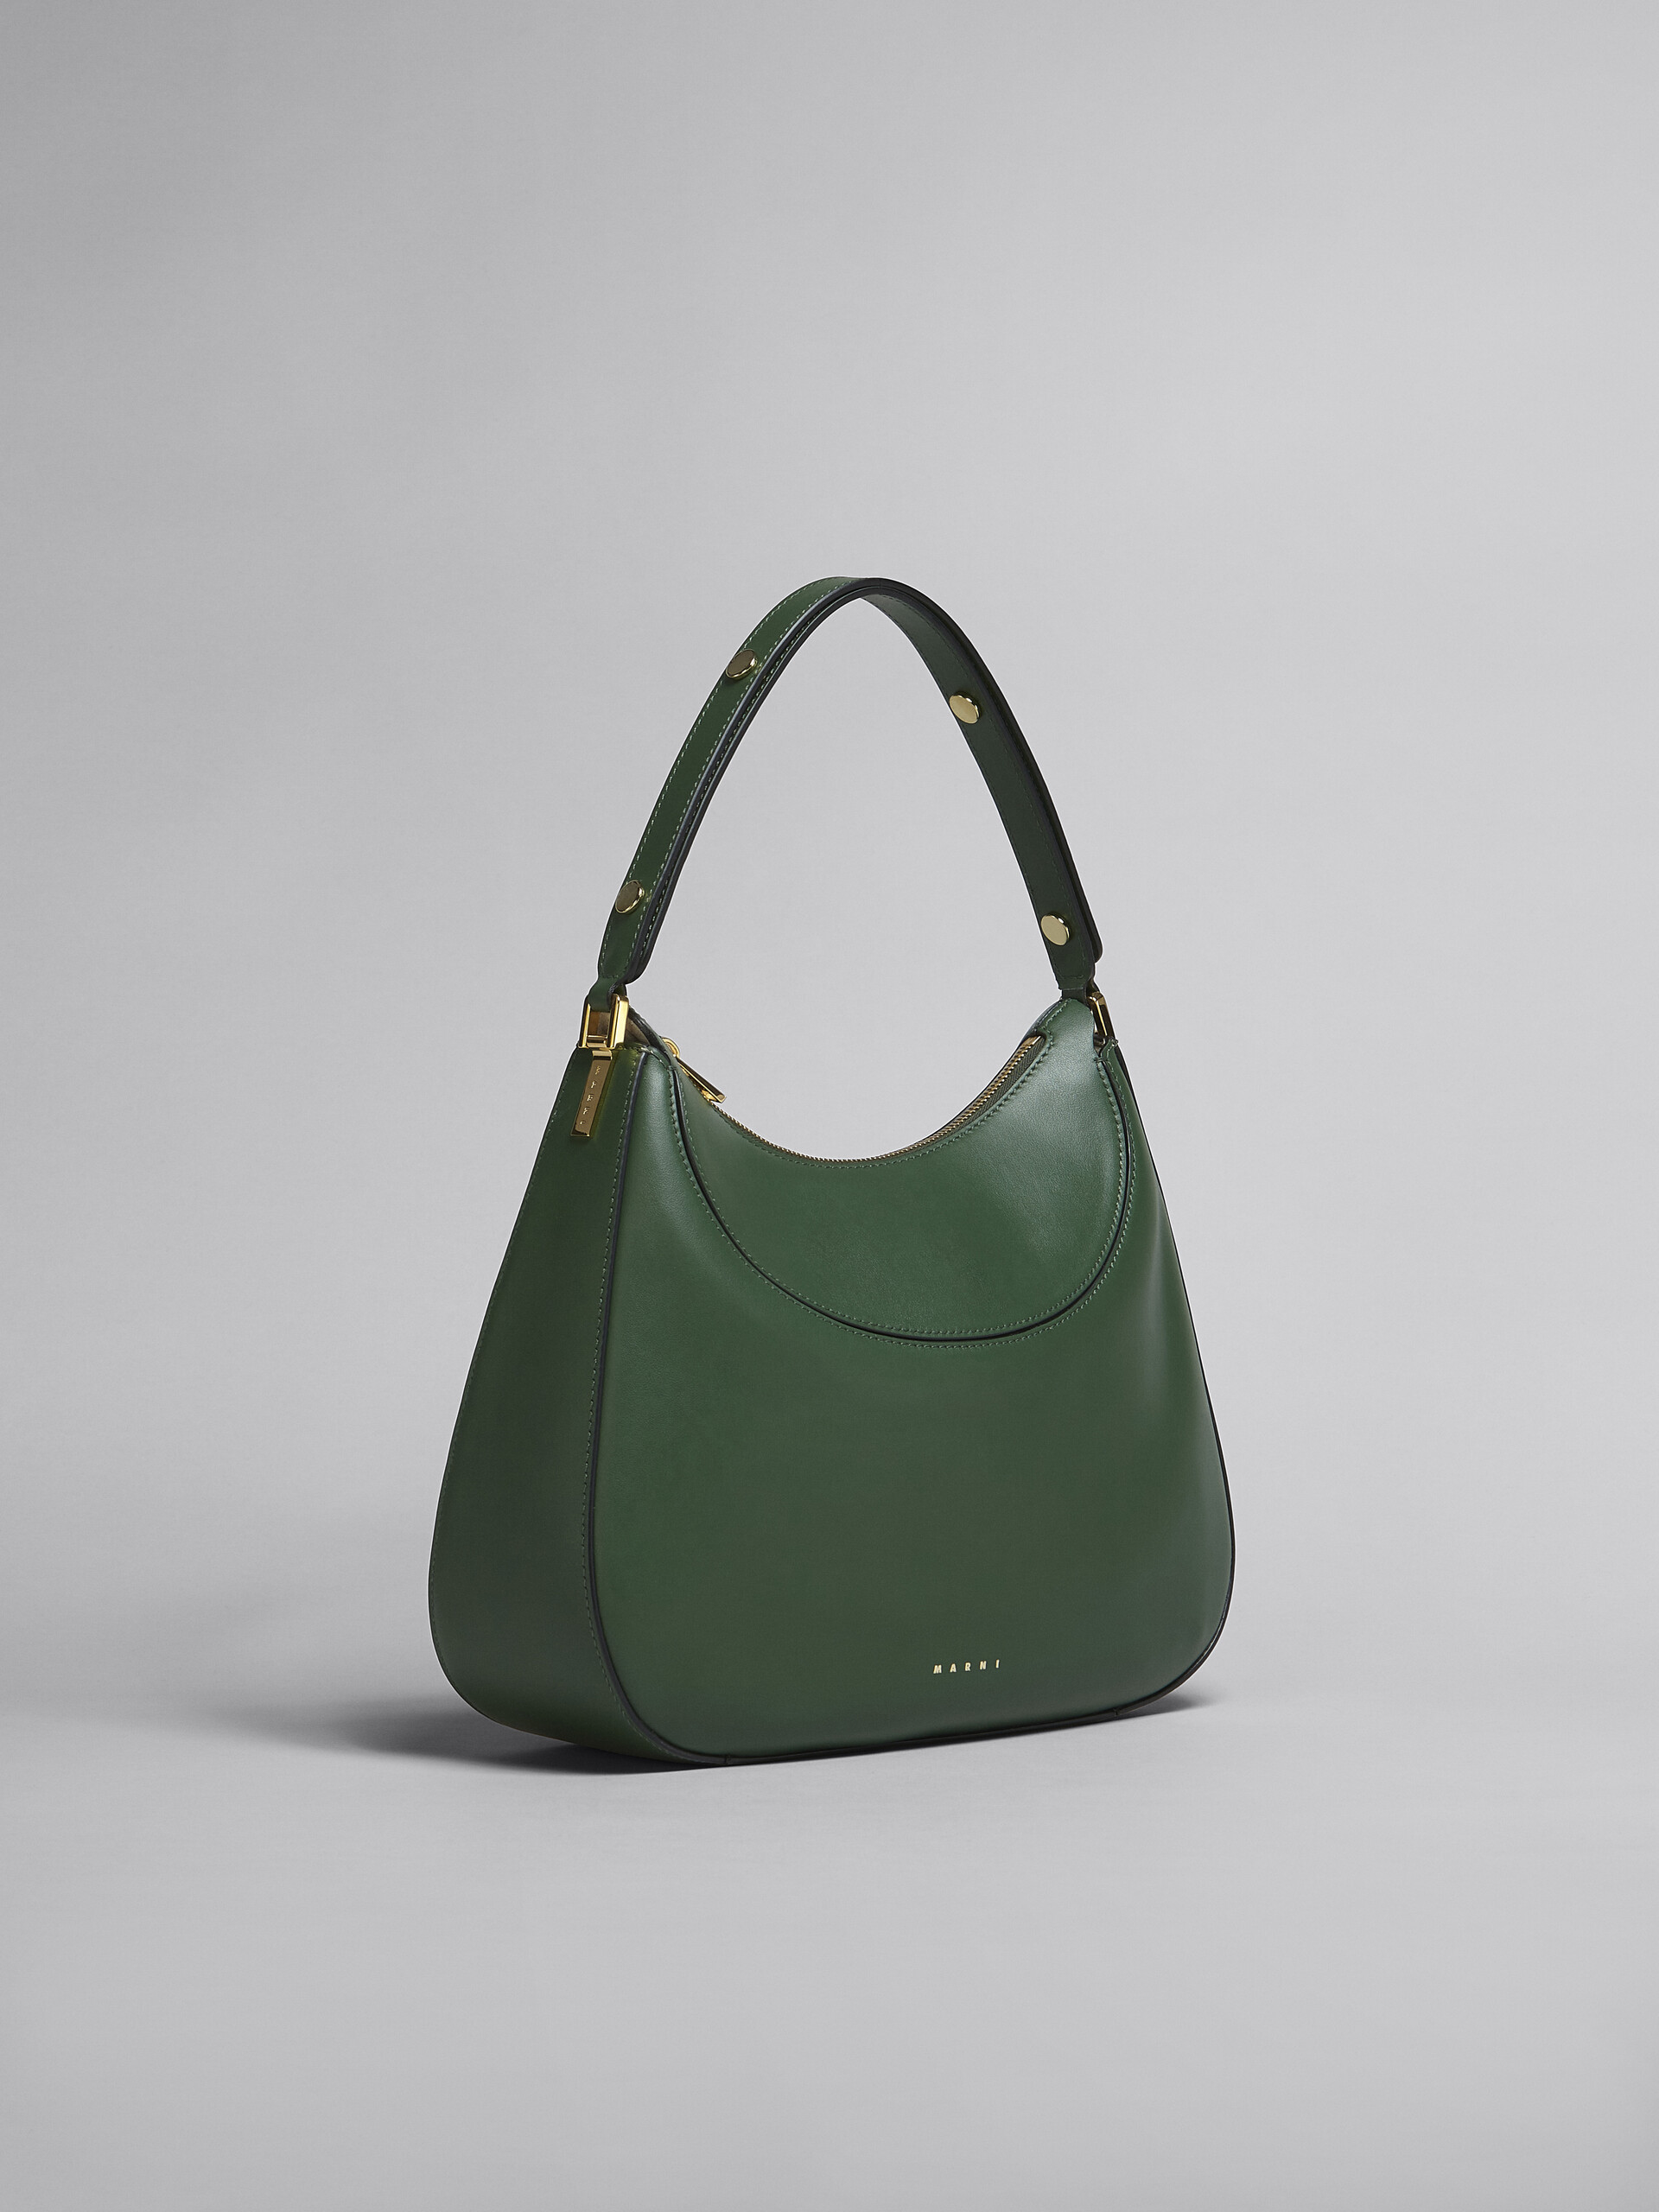 Milano large bag in green leather - Handbag - Image 6